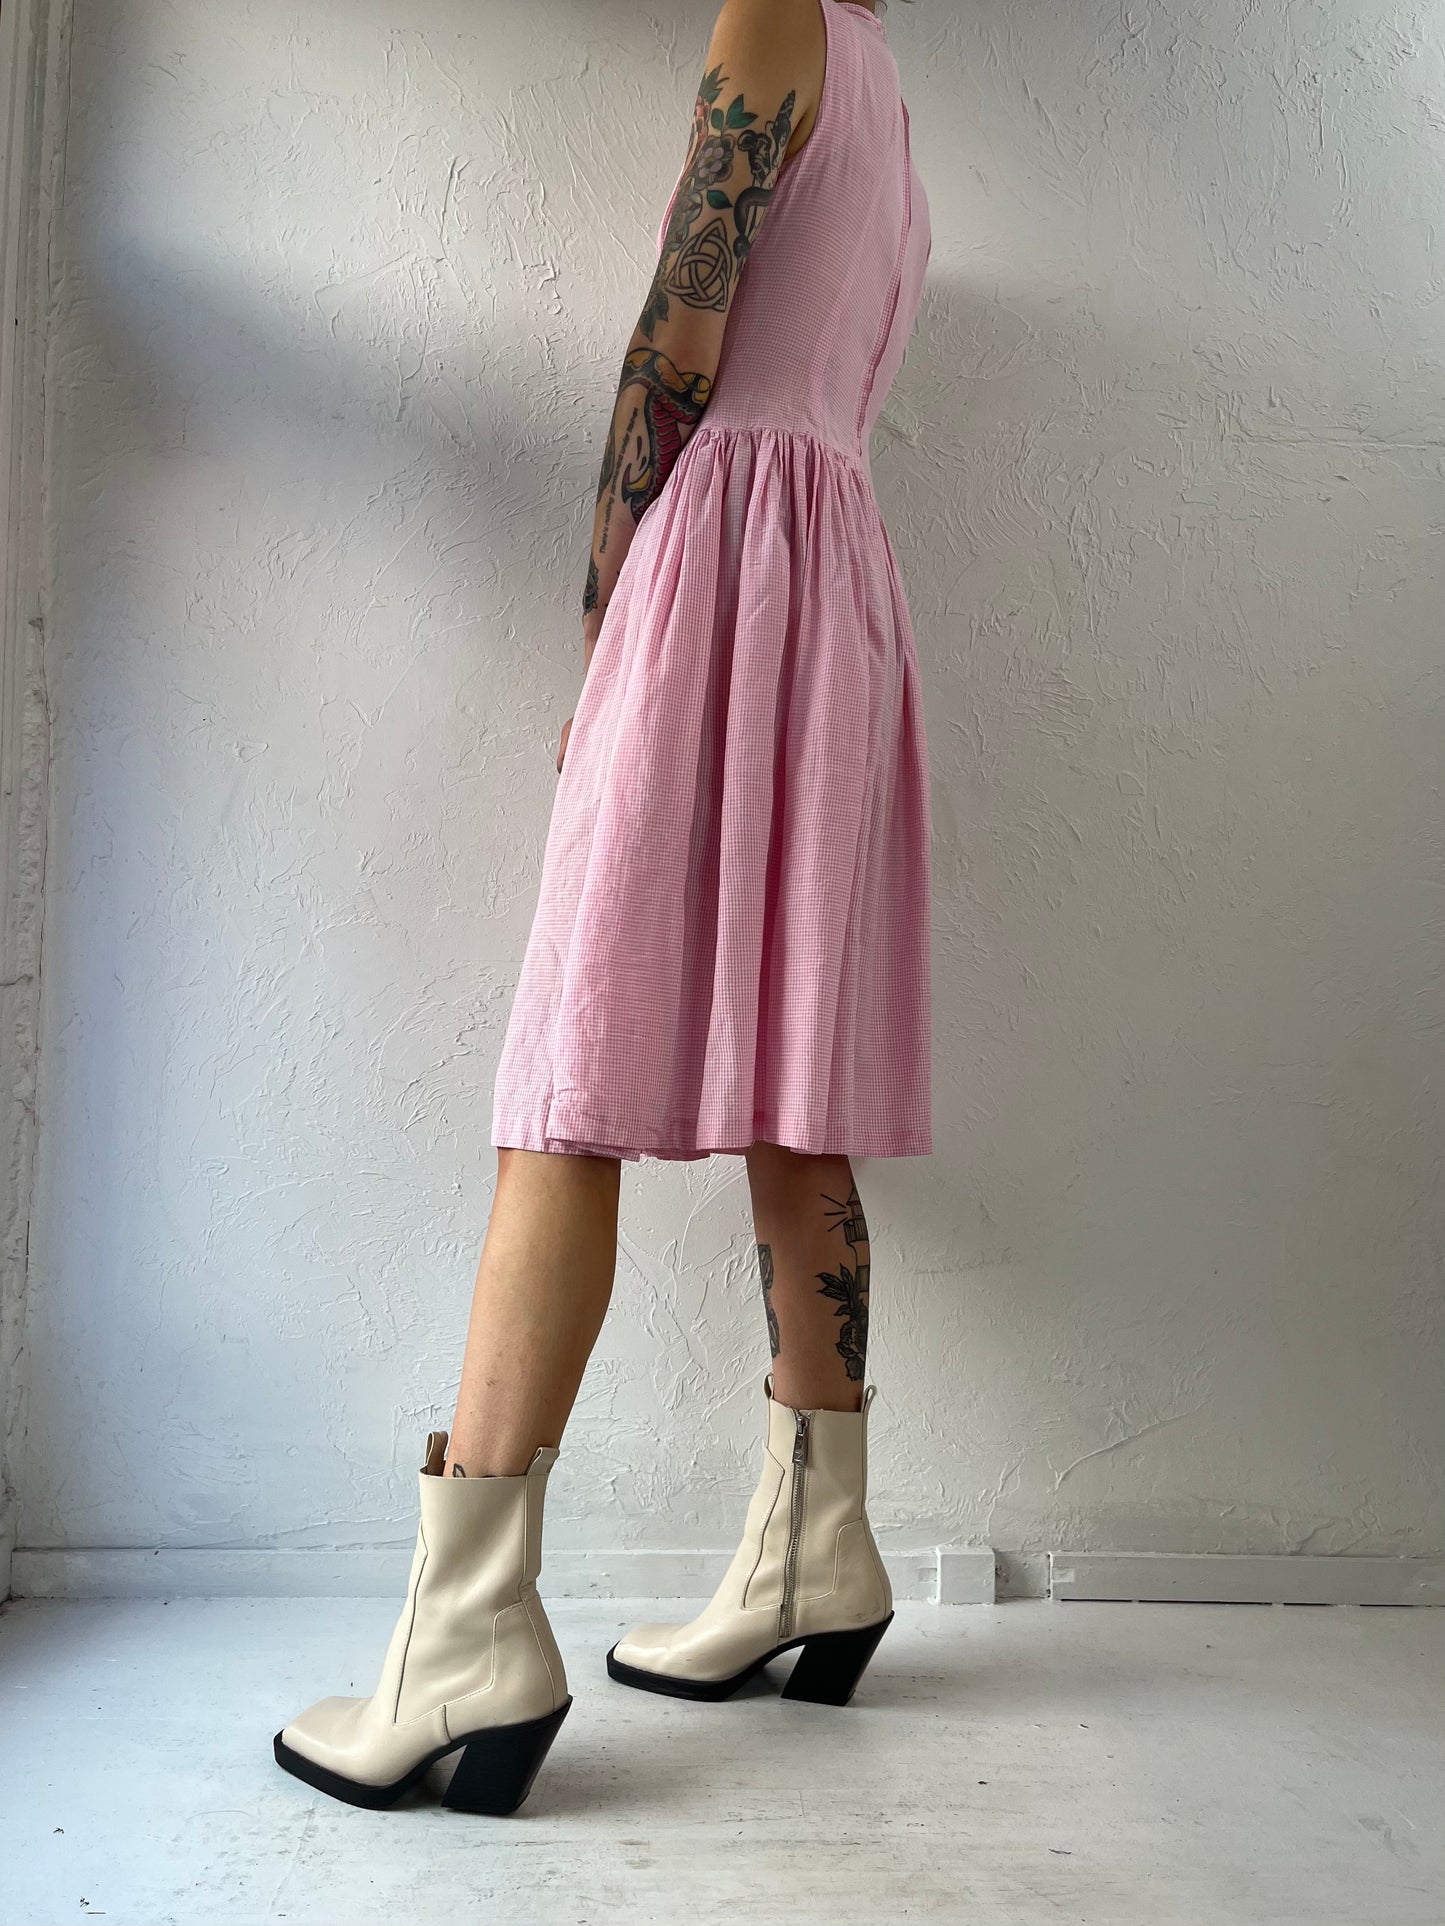 50s 60s Handmade Pink Gingham Sleeveless Dress / XS